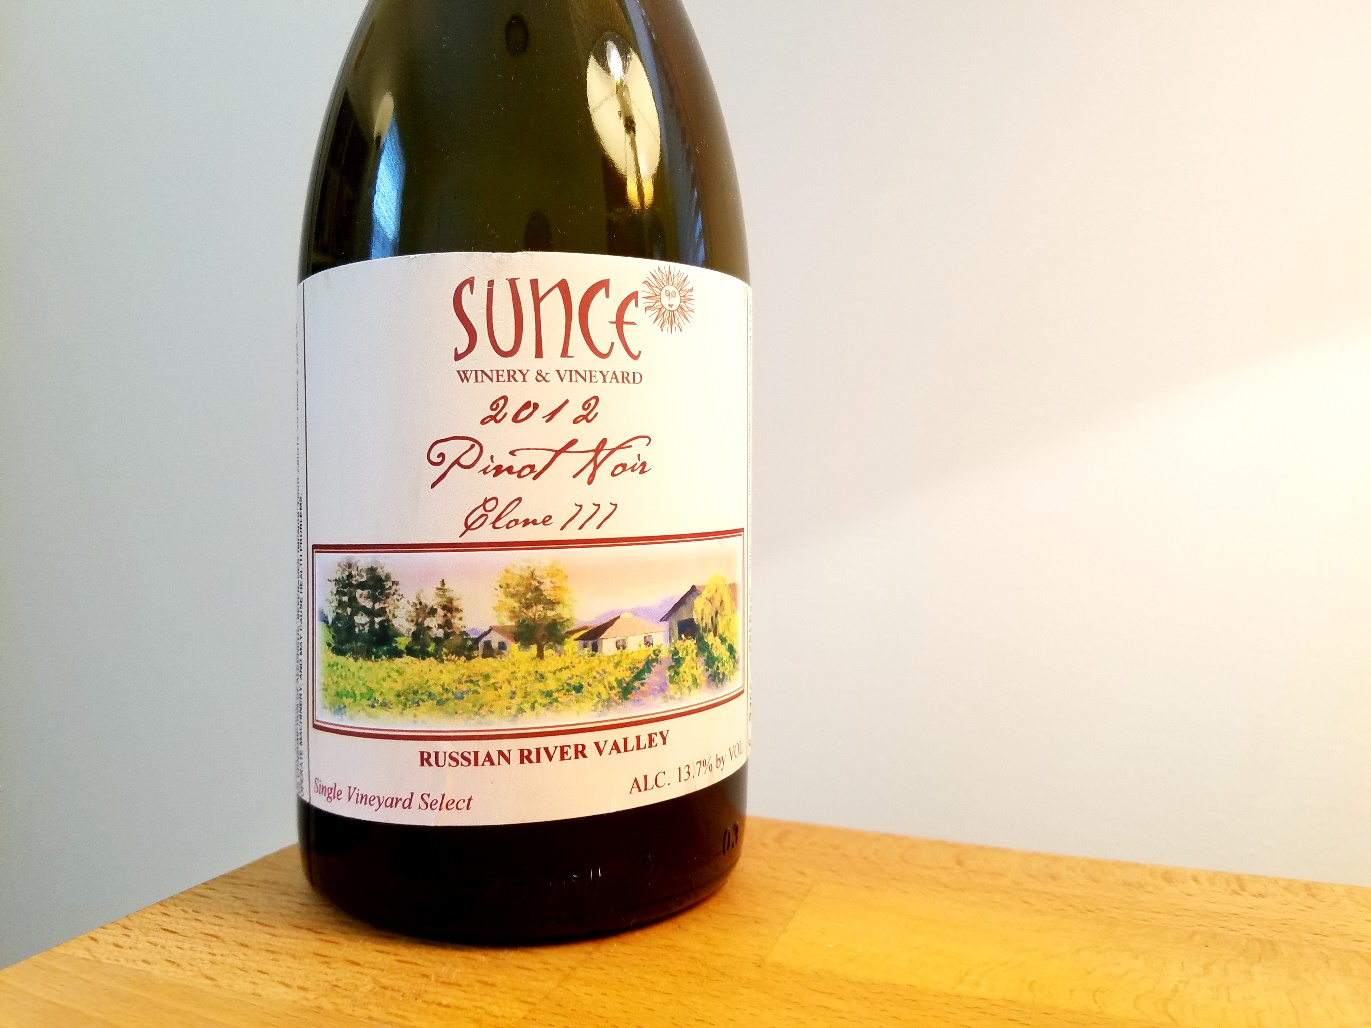 Sunce Winery & Vineyard, Clone 777 Pinot Noir 2012, Single Vineyard Select, Russian River Valley, California, Wine Casual